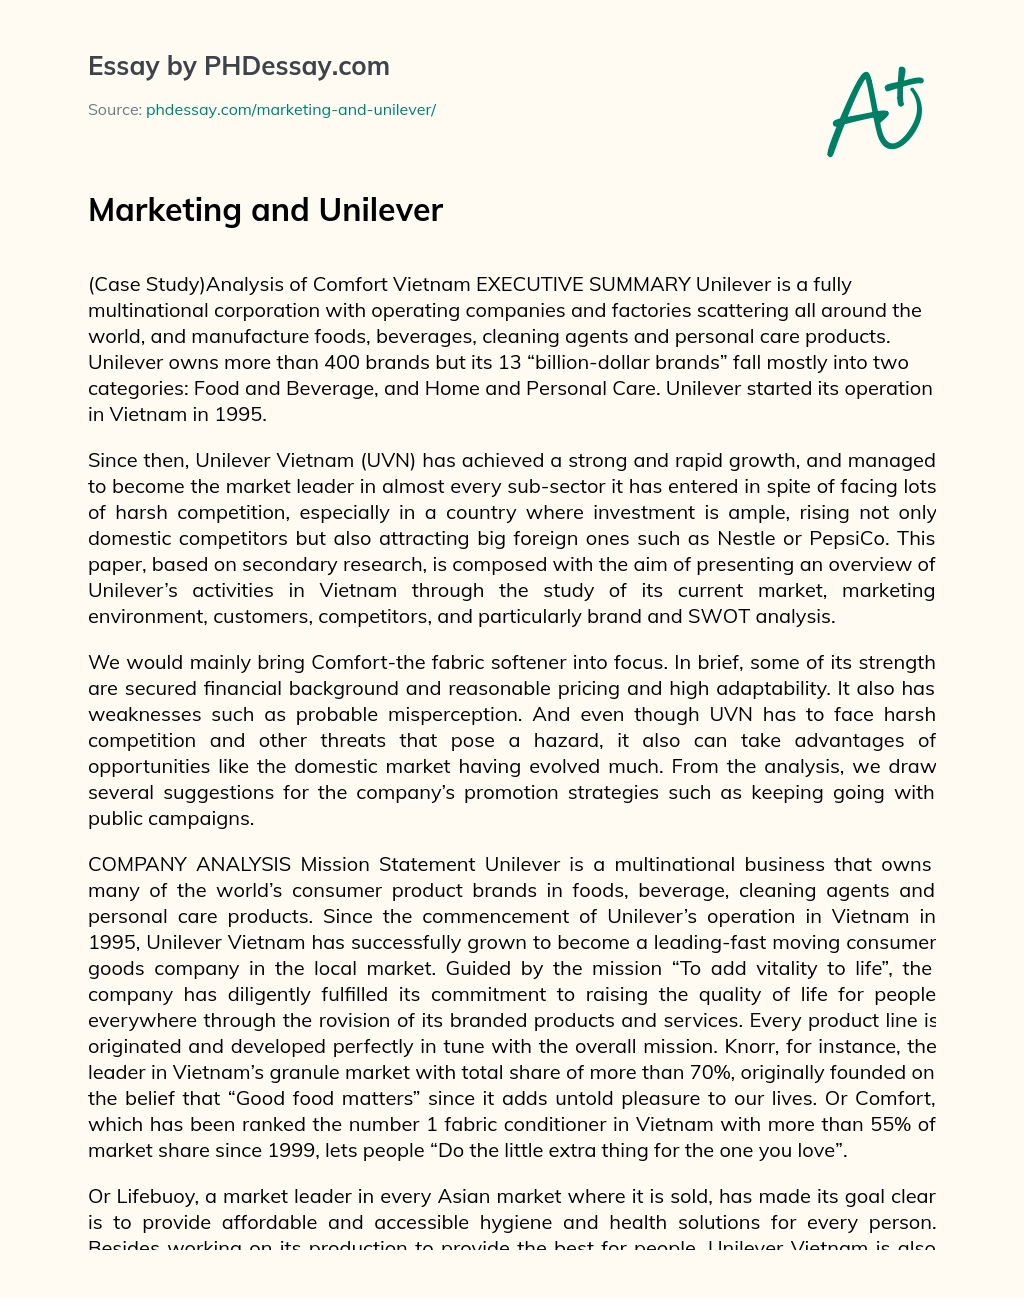 Marketing and Unilever essay